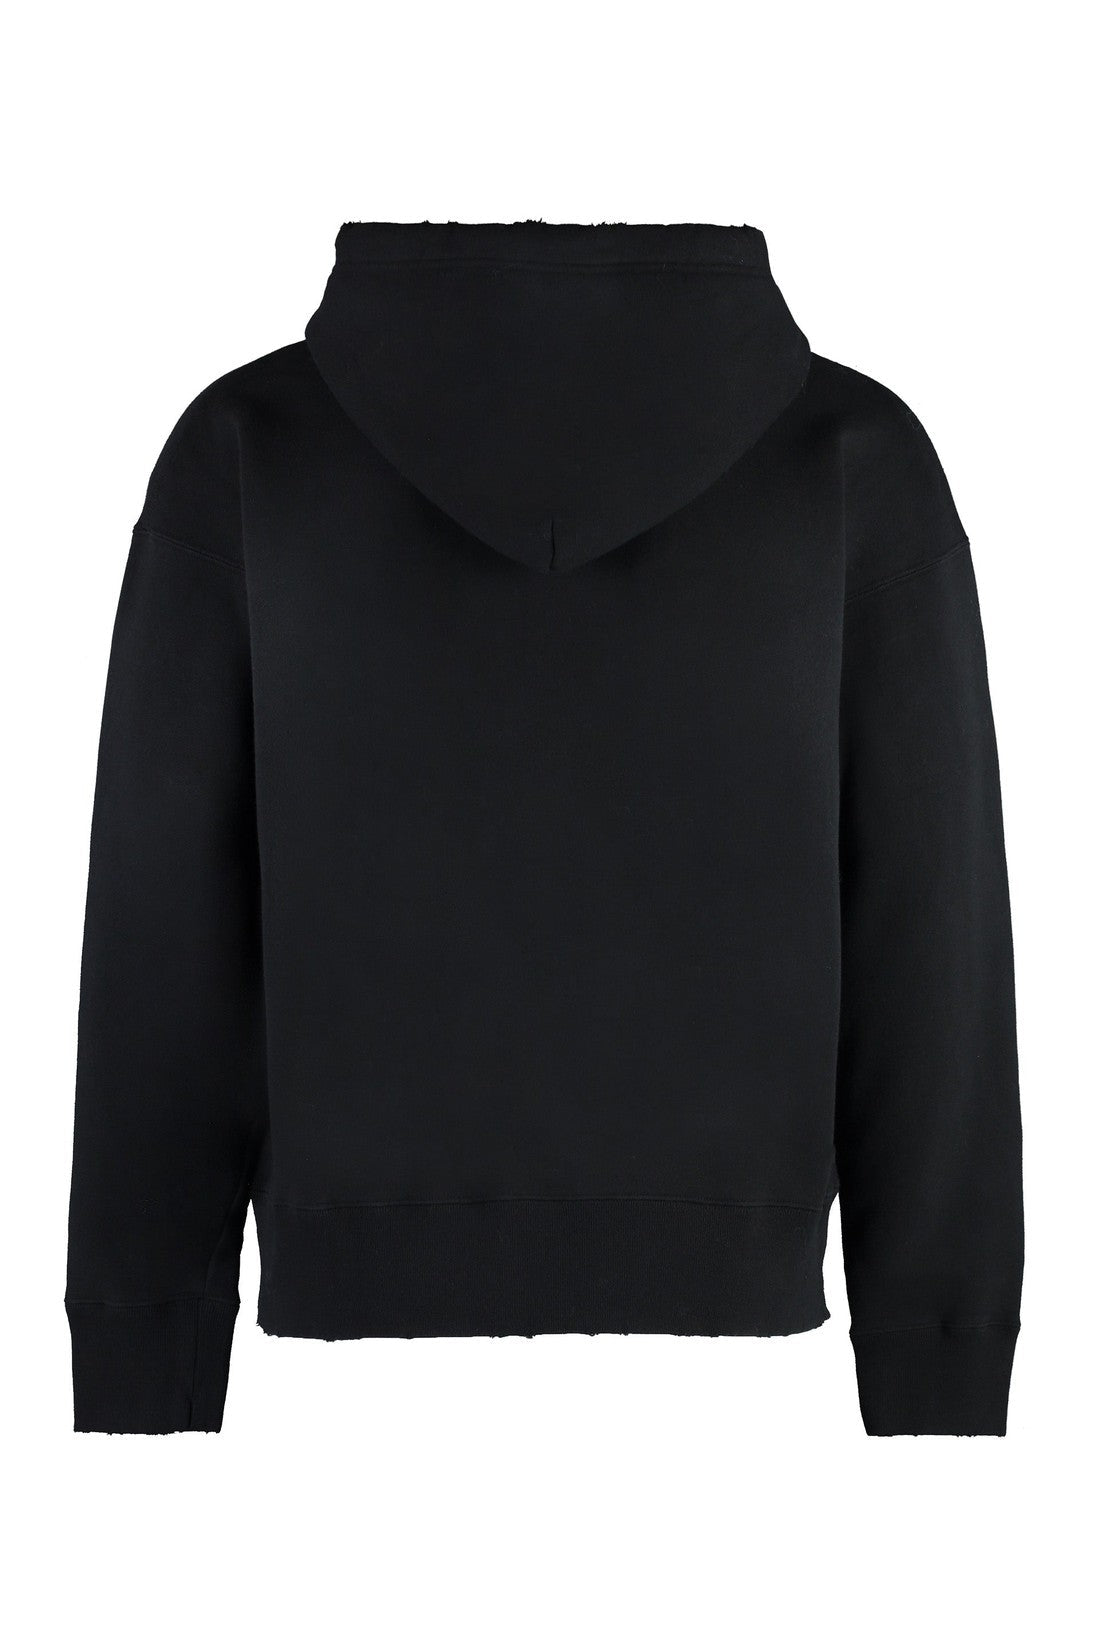 Maison Mihara Yasuhiro-OUTLET-SALE-Full zip hoodie-ARCHIVIST